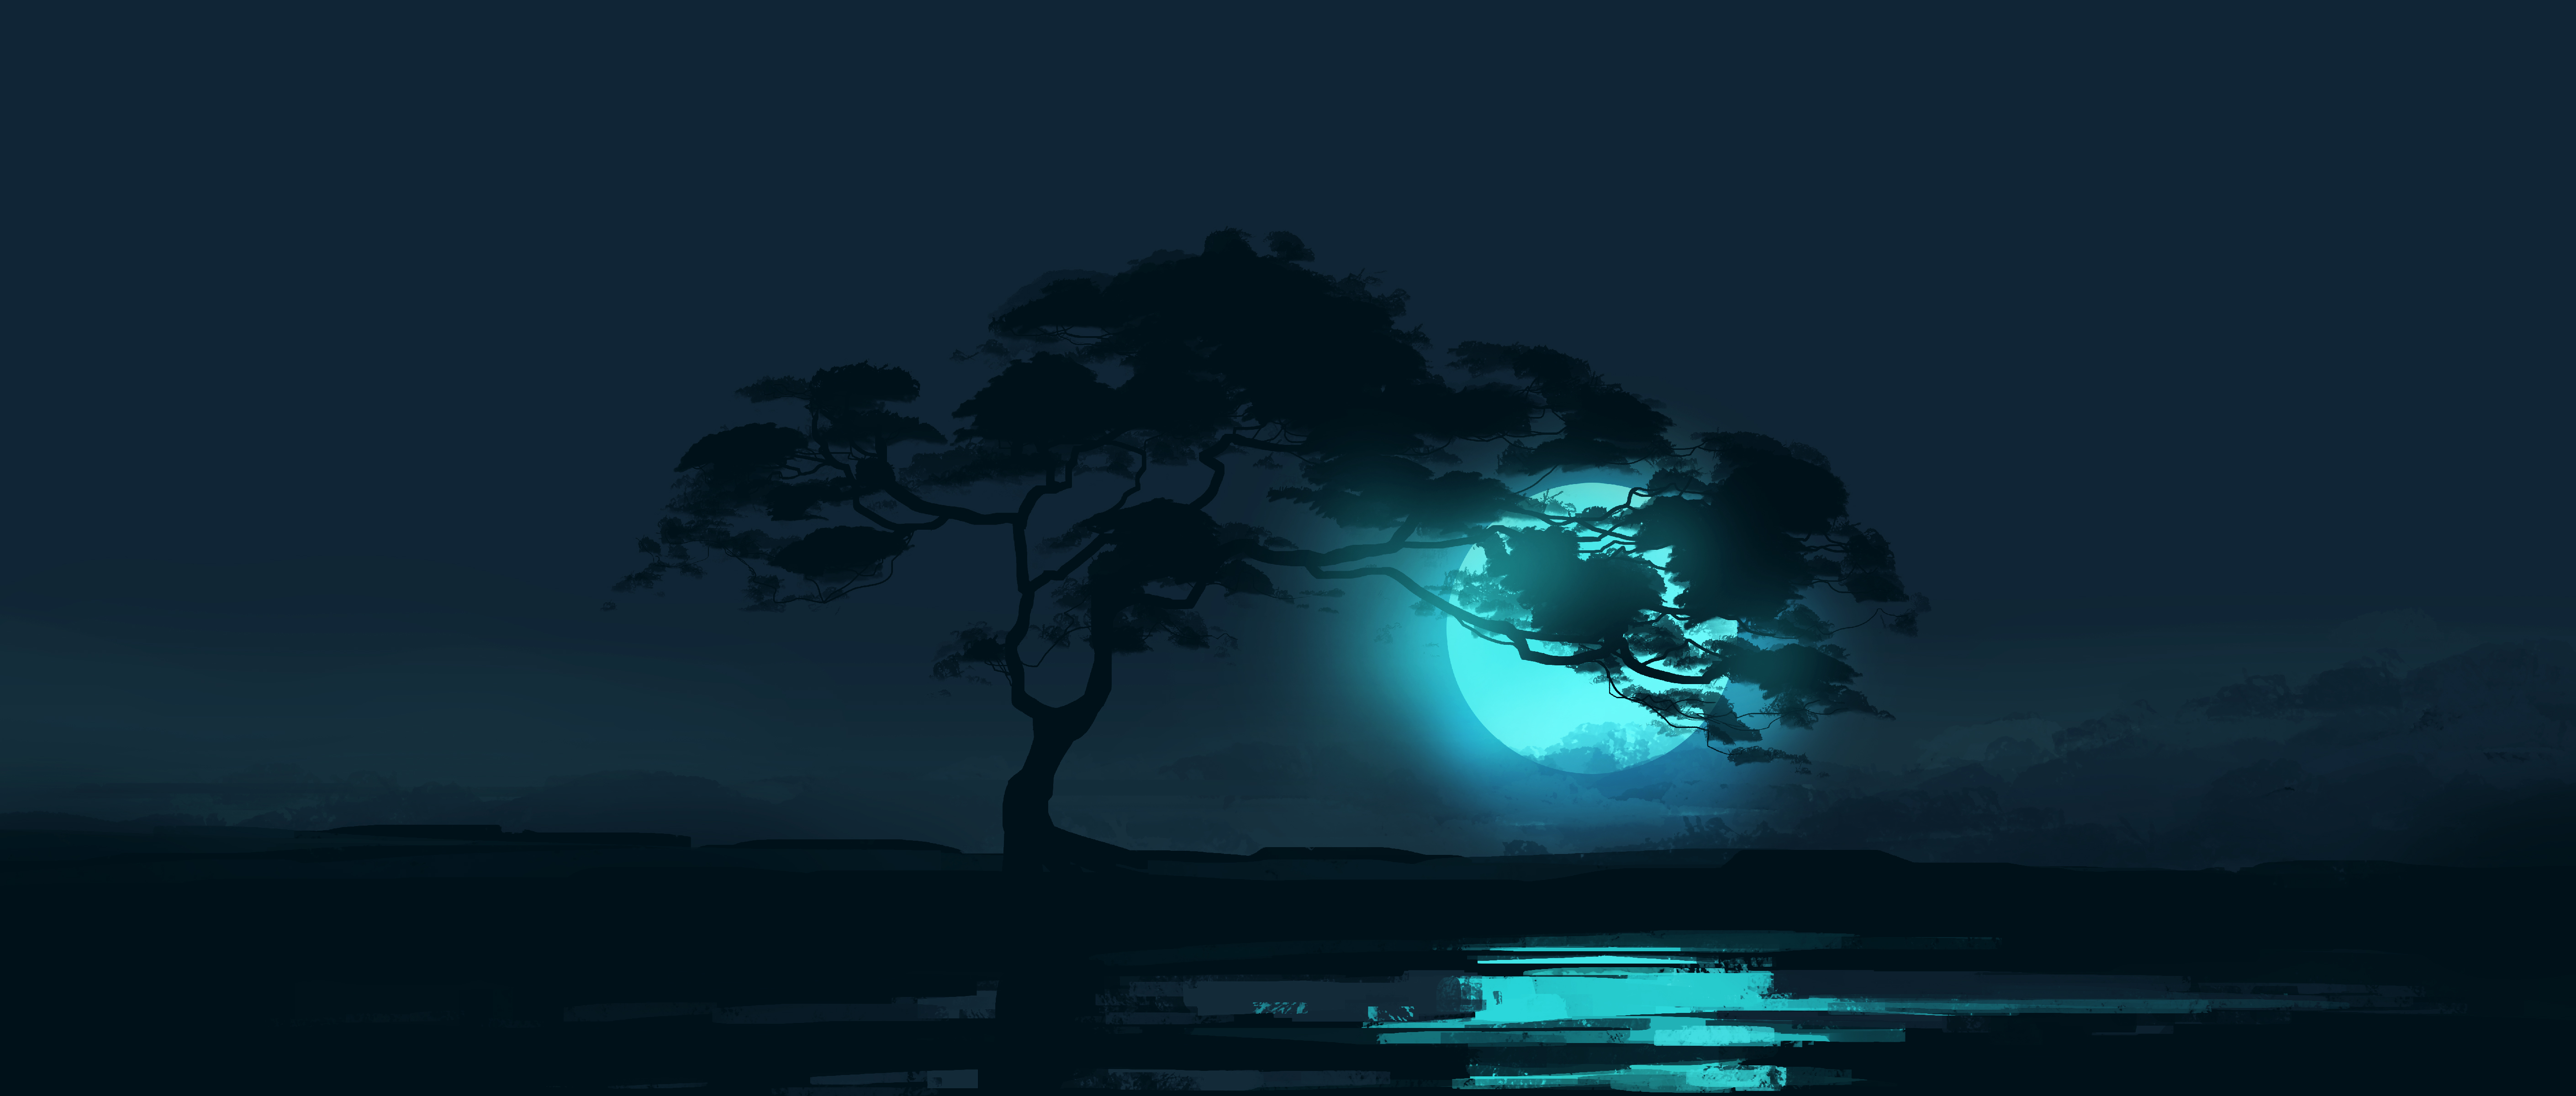 General 5640x2400 Gracile digital art artwork illustration environment wide screen ultrawide trees landscape night Moon moonlight reflection minimalism space savannah